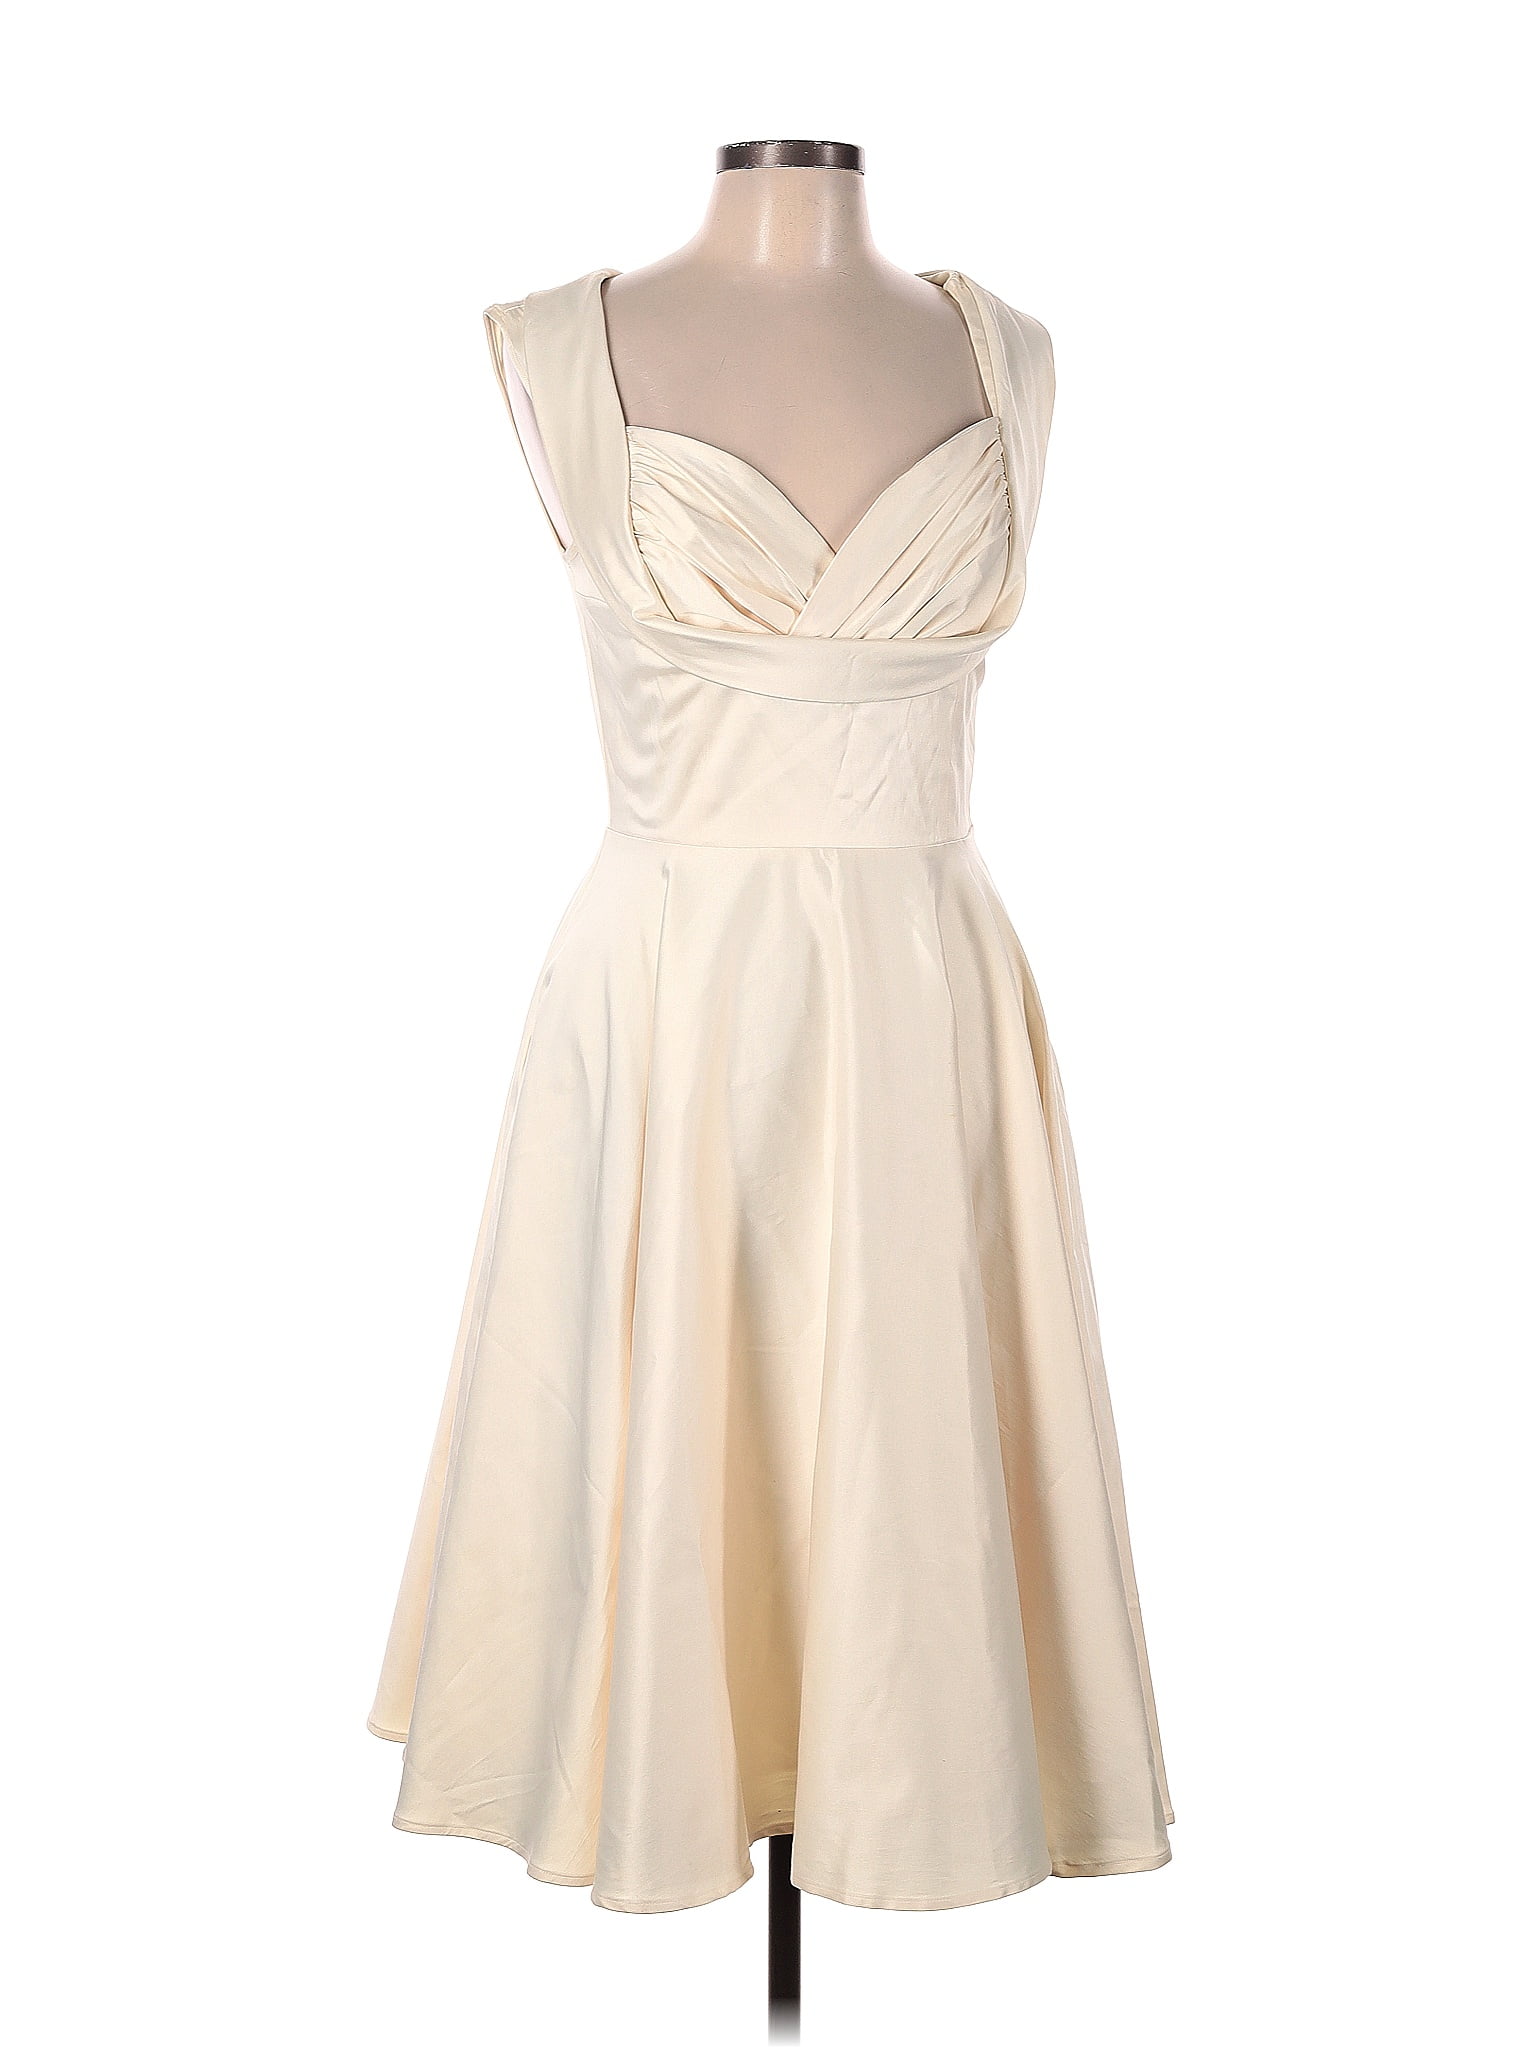 Candice Gwinn Solid Ivory Cocktail Dress Size 10 - 81% off | thredUP